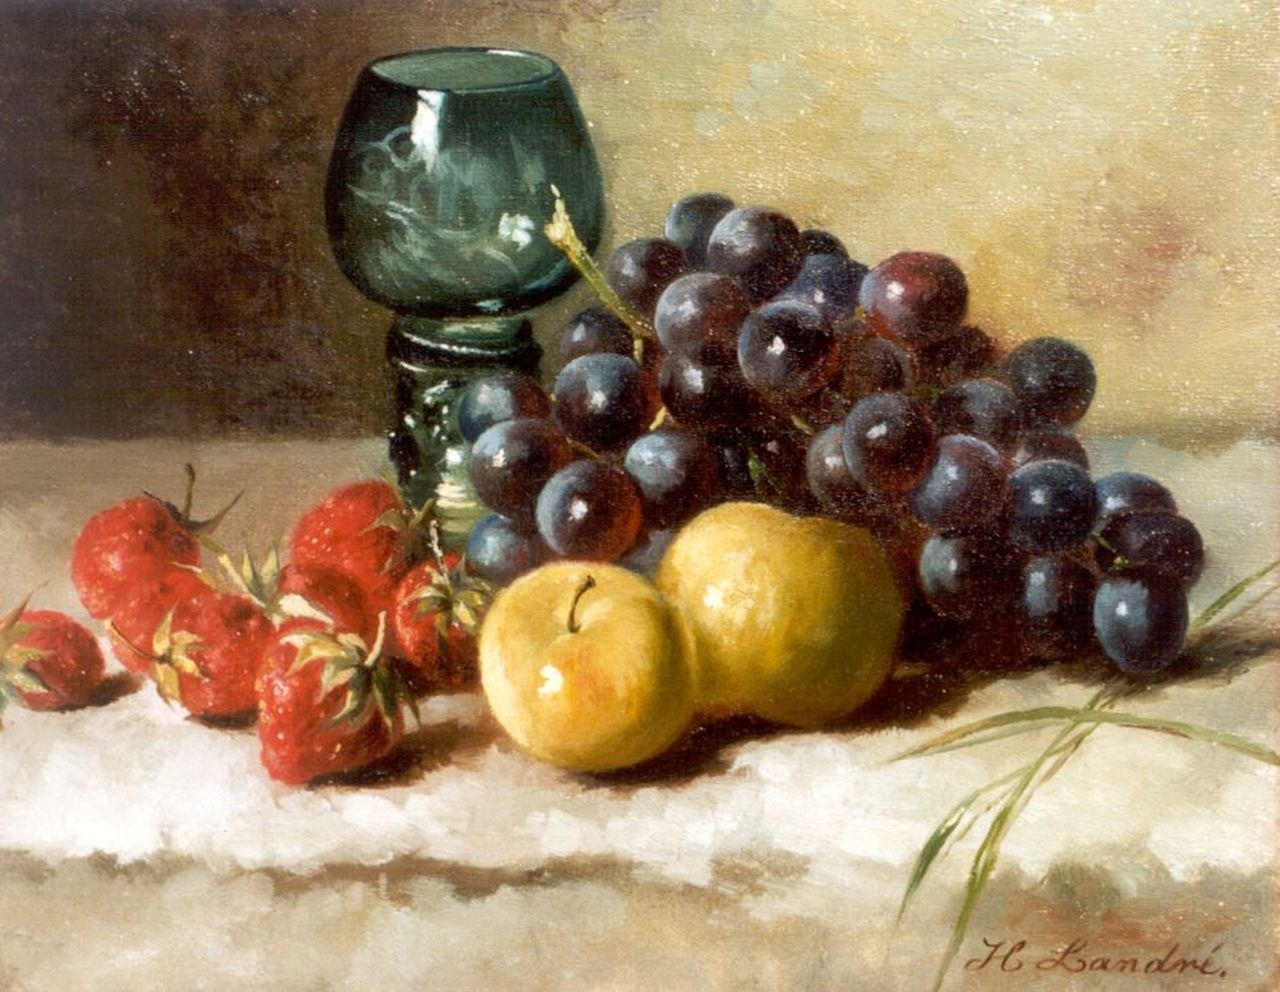 Landré-van der Kellen H.W.  | Hendrika Wilhelmina Landré-van der Kellen, A still life with grapes and strawberries, oil on canvas 25.0 x 31.0 cm, signed l.r.